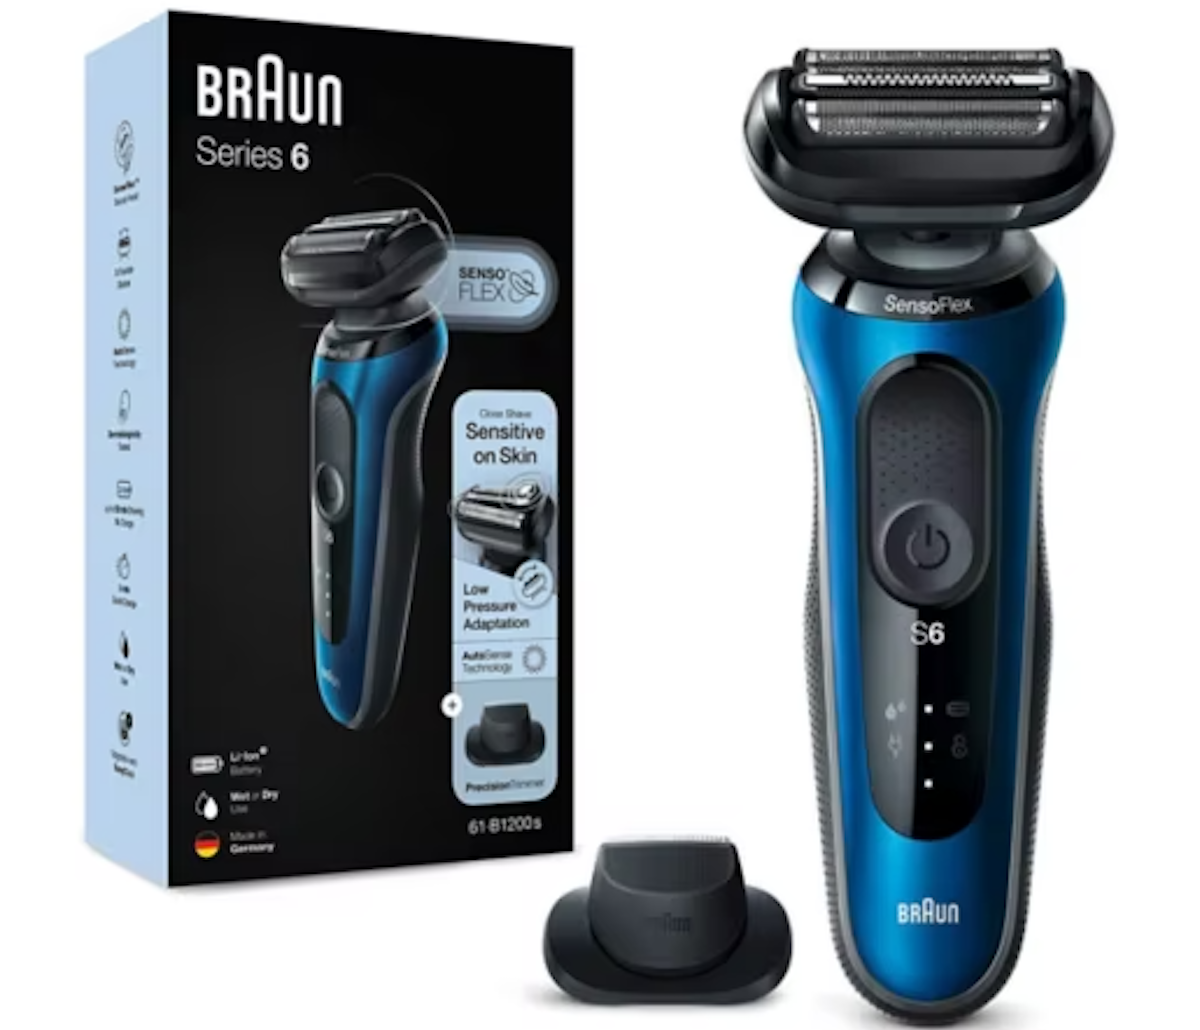 Braun blue and black electronic razor